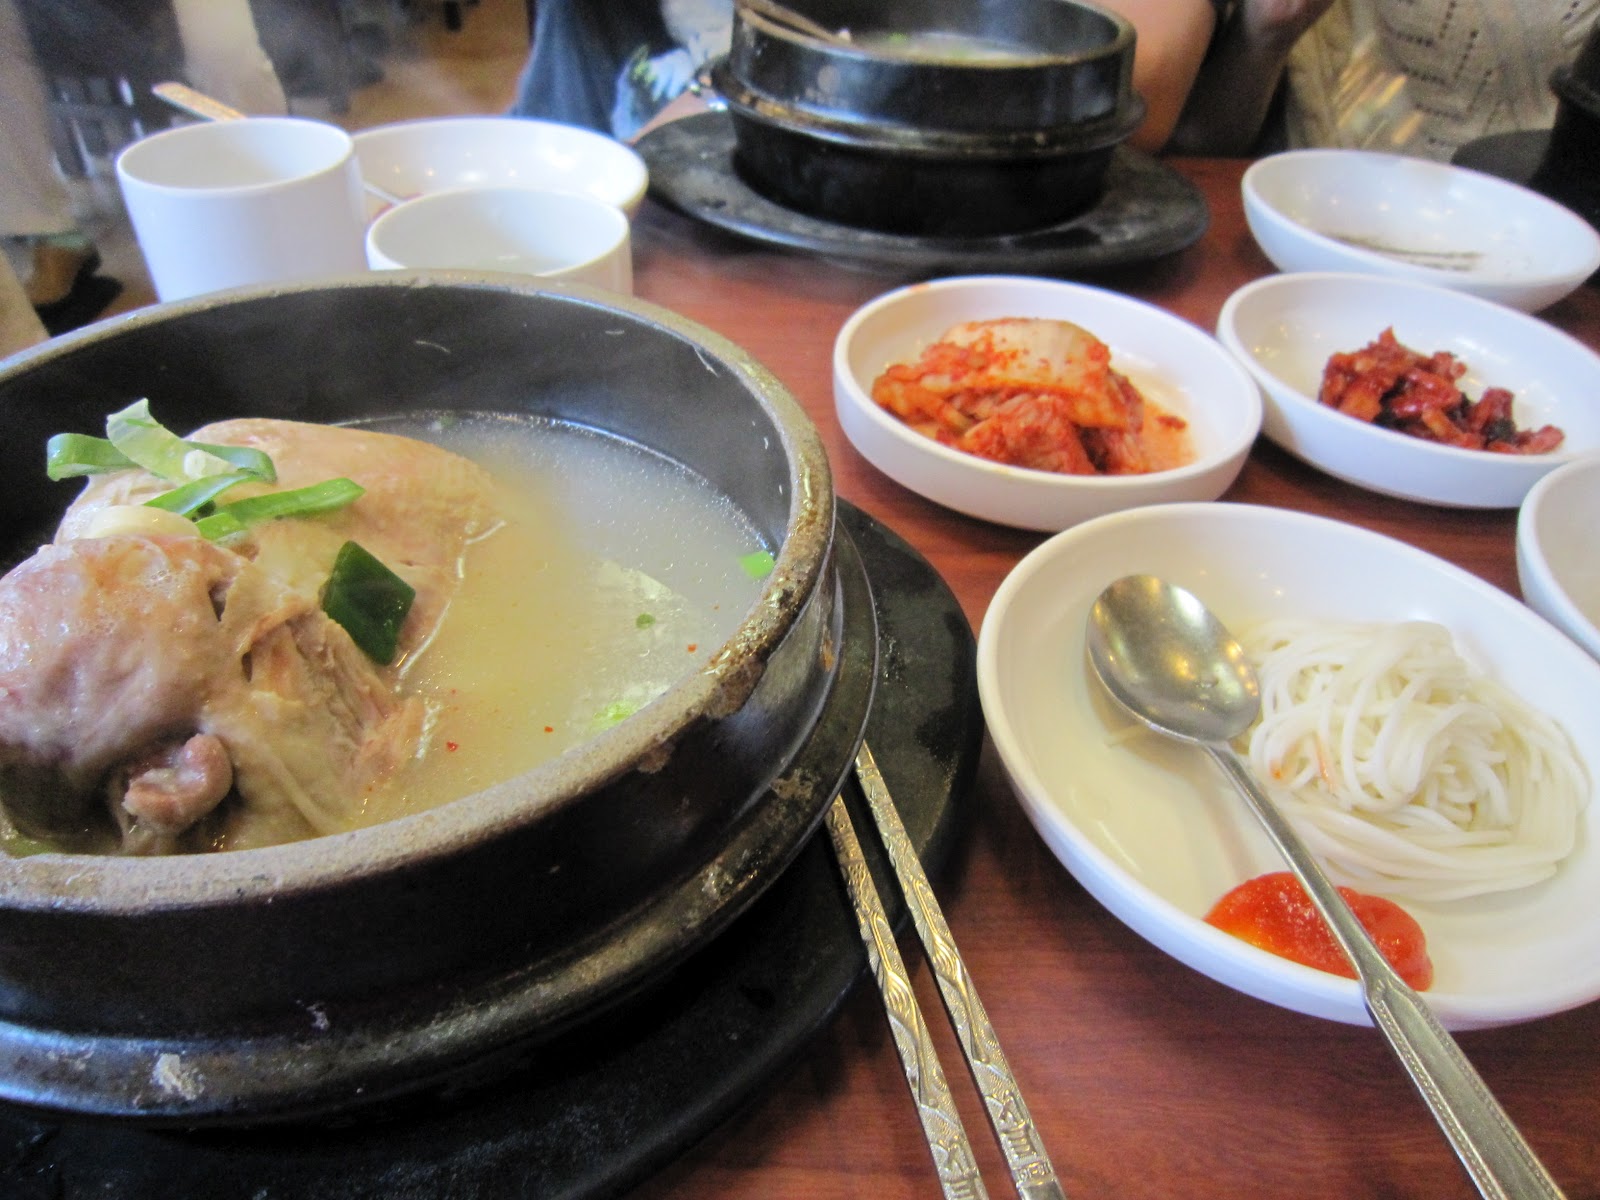 Resep Masakan Korea Sederhana